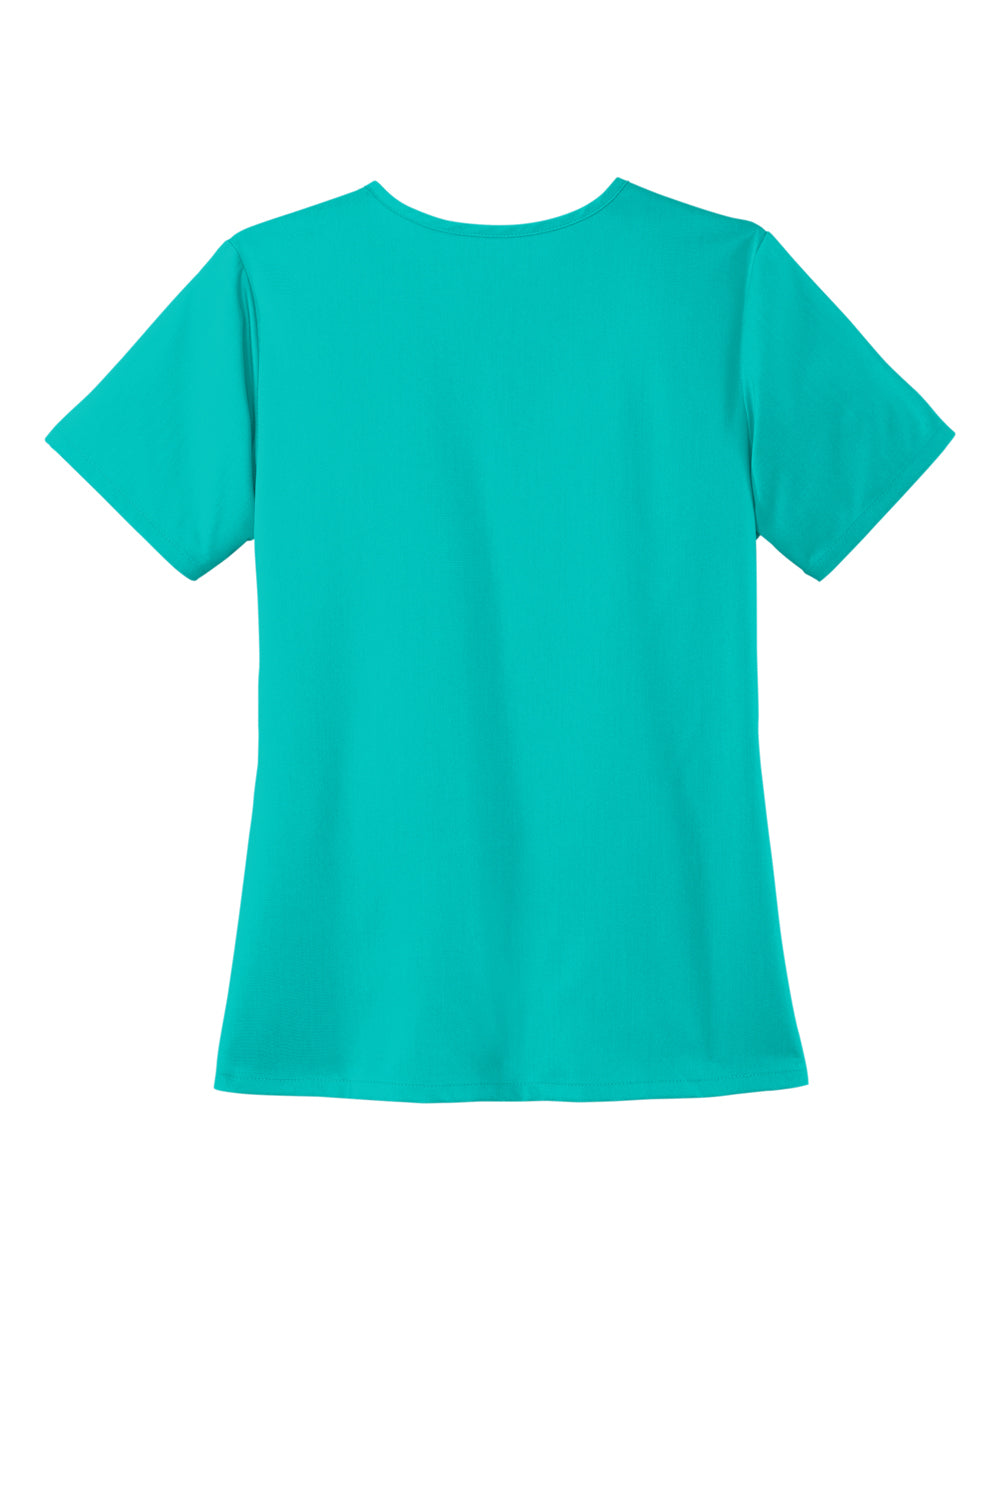 Wonderwink WW4168 Premiere Flex Short Sleeve V-Neck Shirt w/ Pockets Teal Blue Flat Back